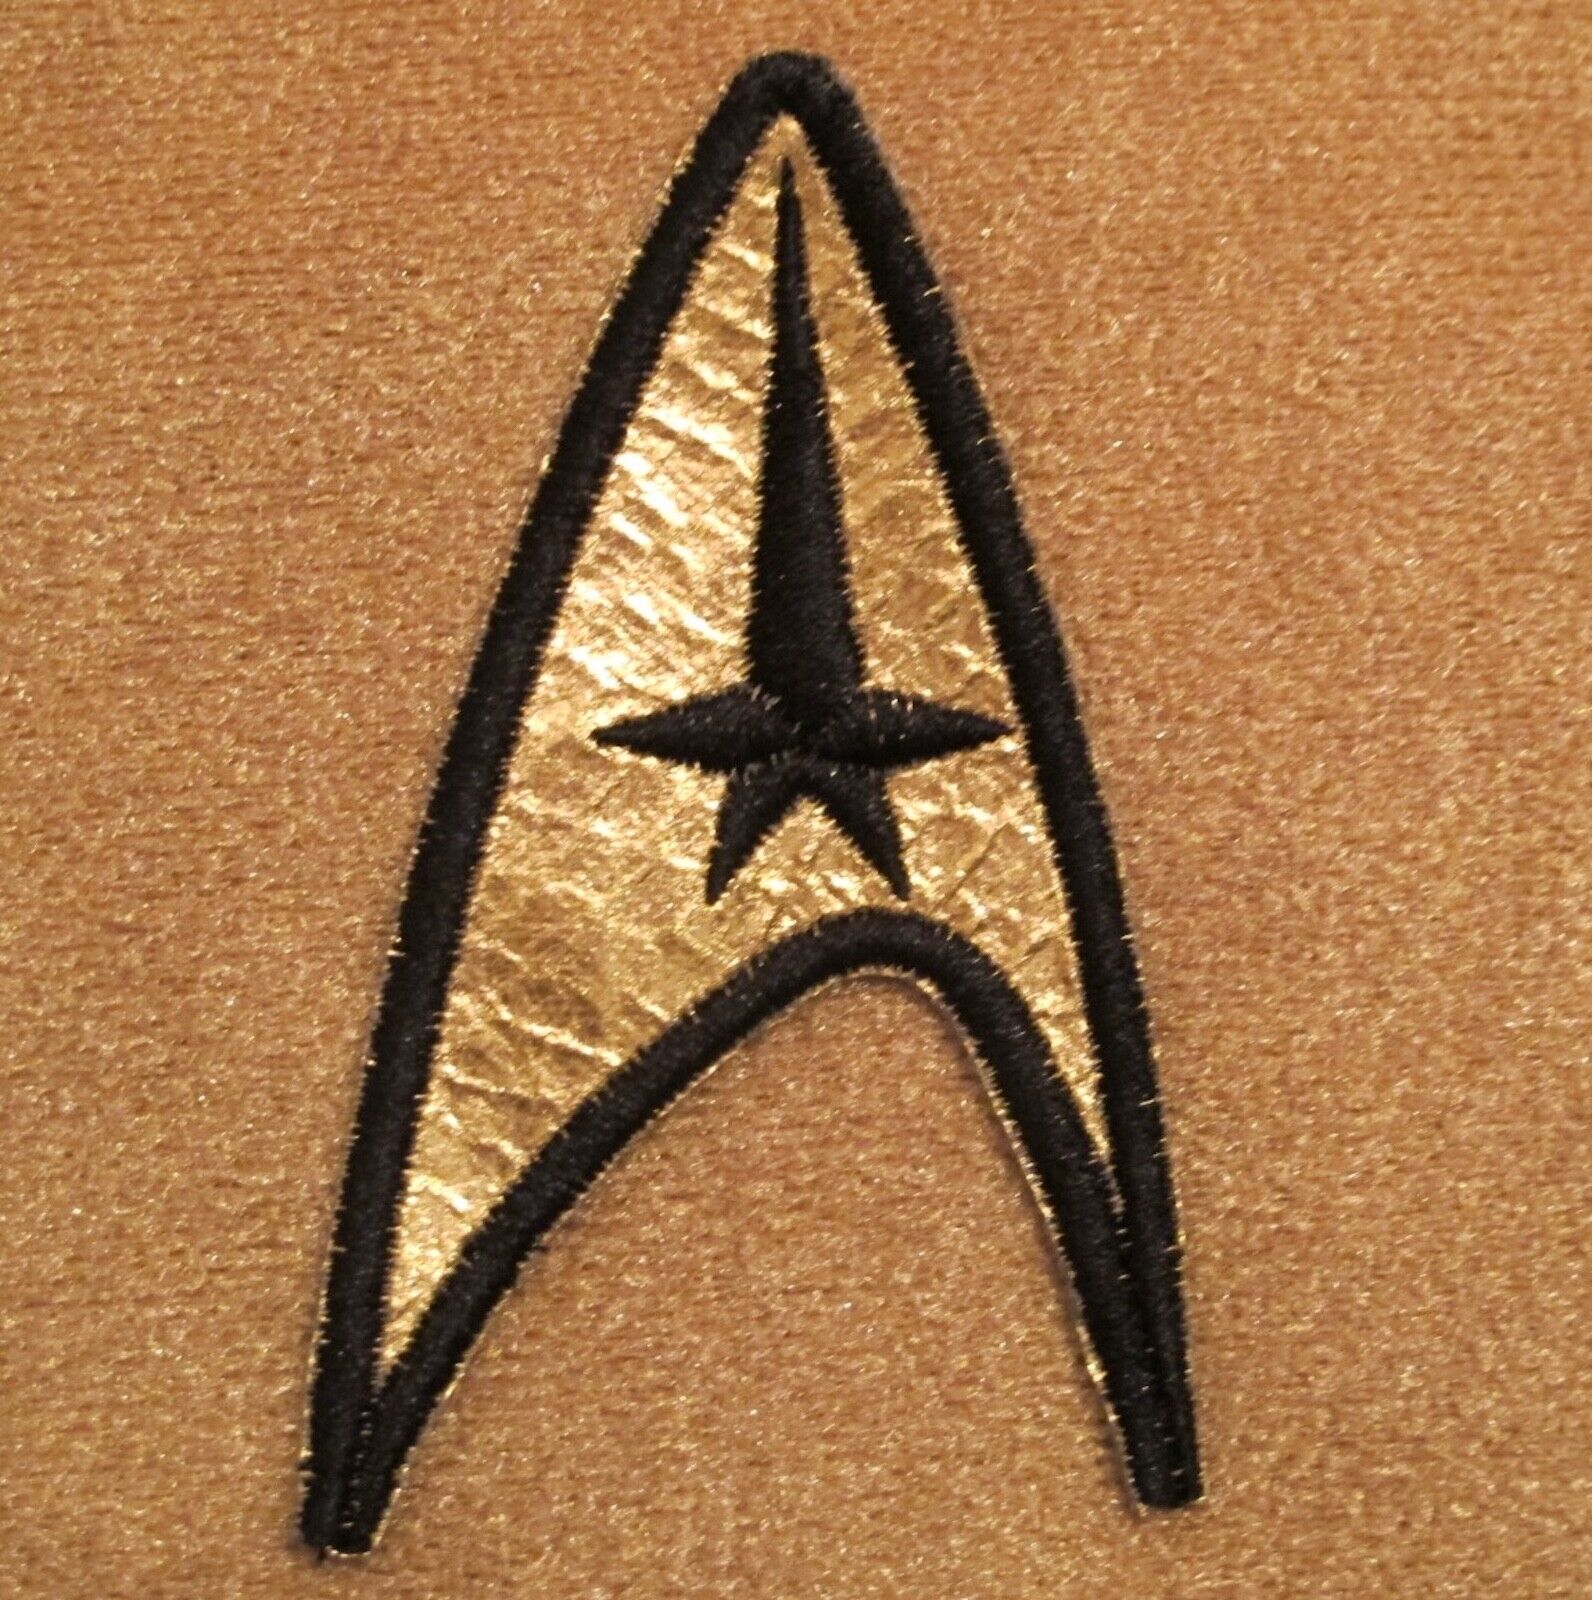 Star Trek TOS Original Series Uniform Insignia Patches - Cosplay Costume Patch